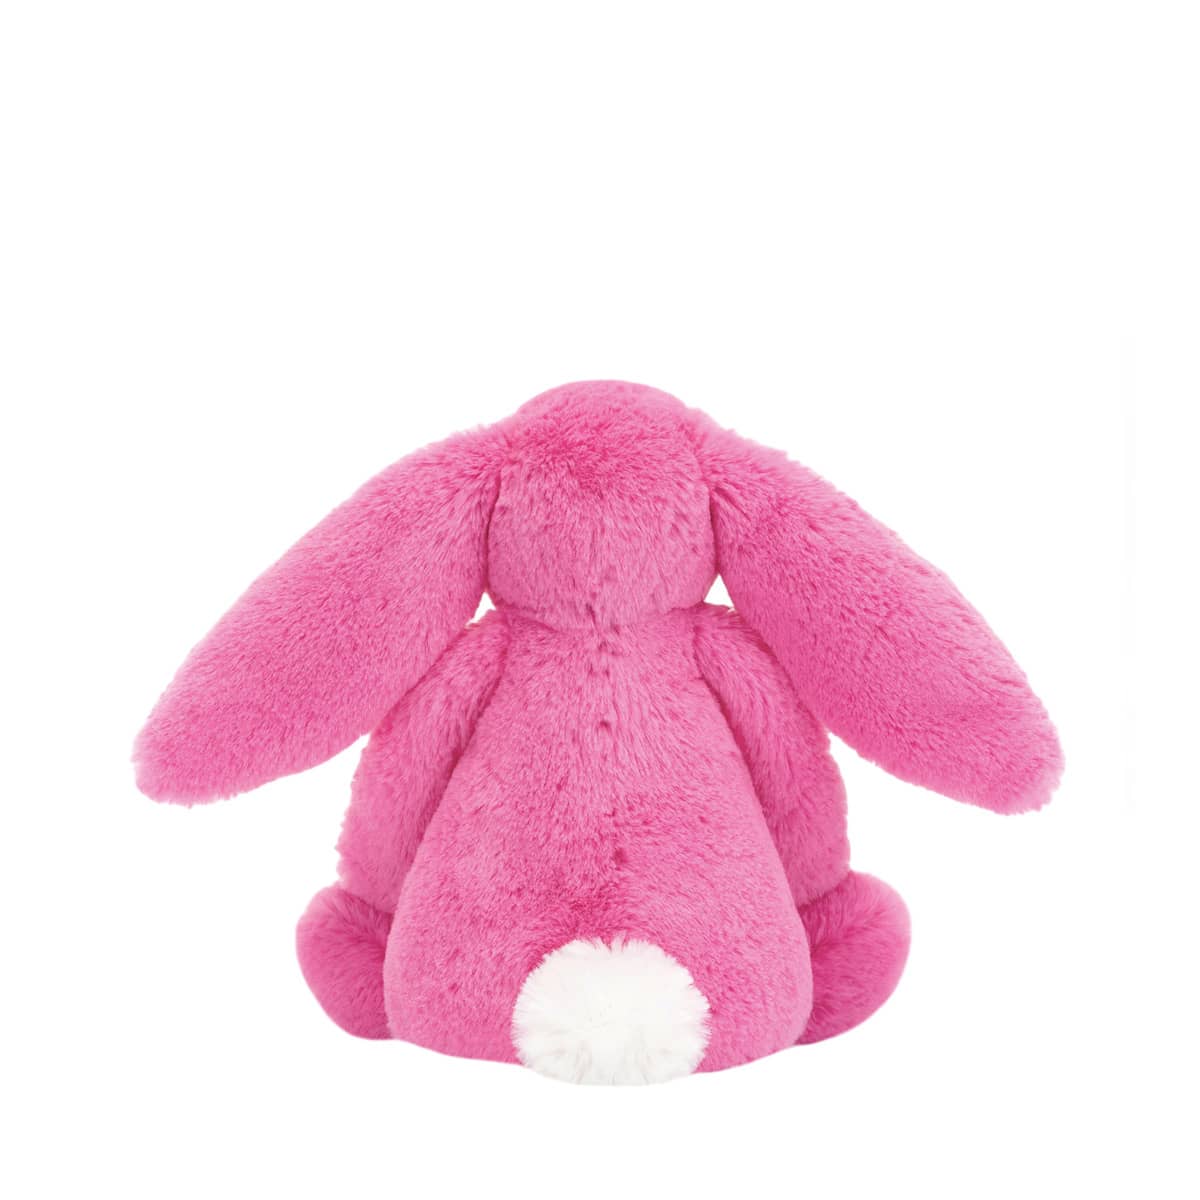 Jellycat Bashful Bunny Small - Hot Pink